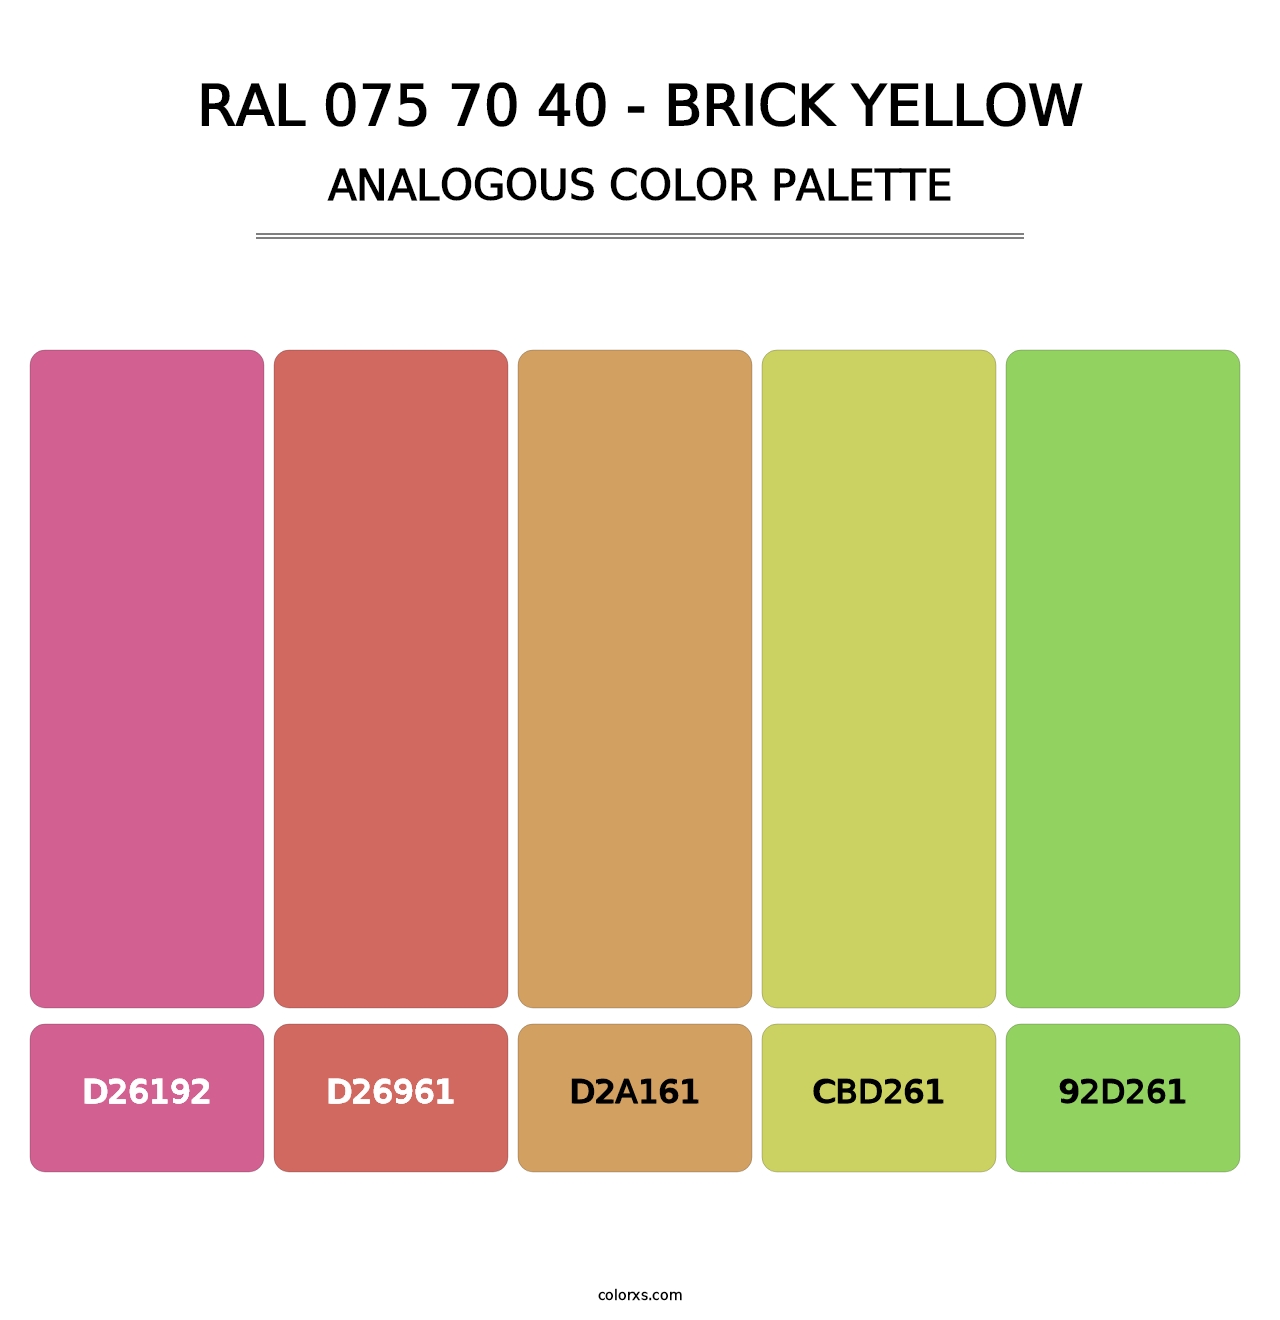 RAL 075 70 40 - Brick Yellow - Analogous Color Palette